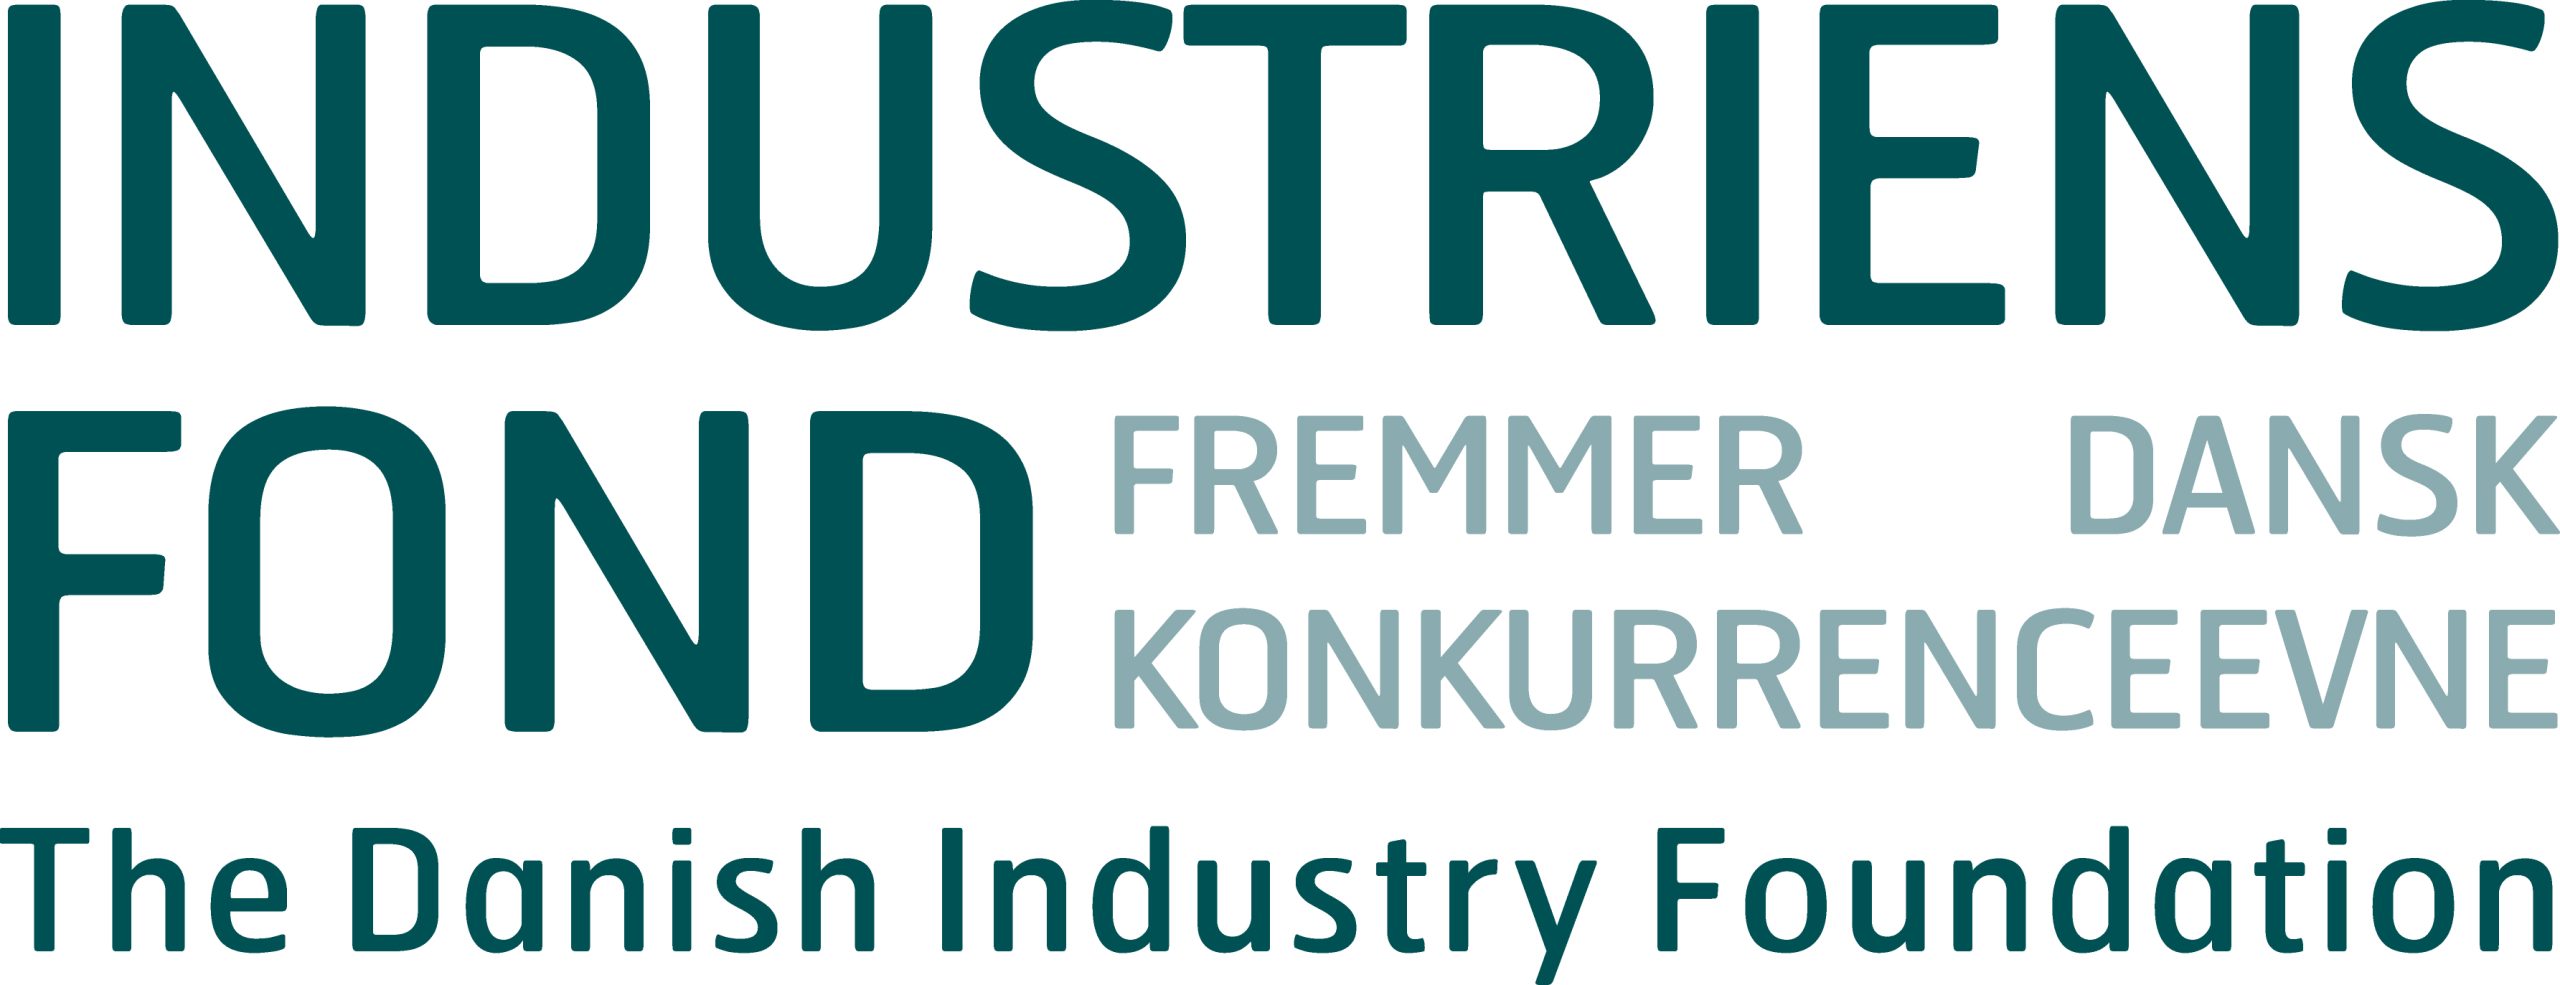 logo_-_industriens_fond